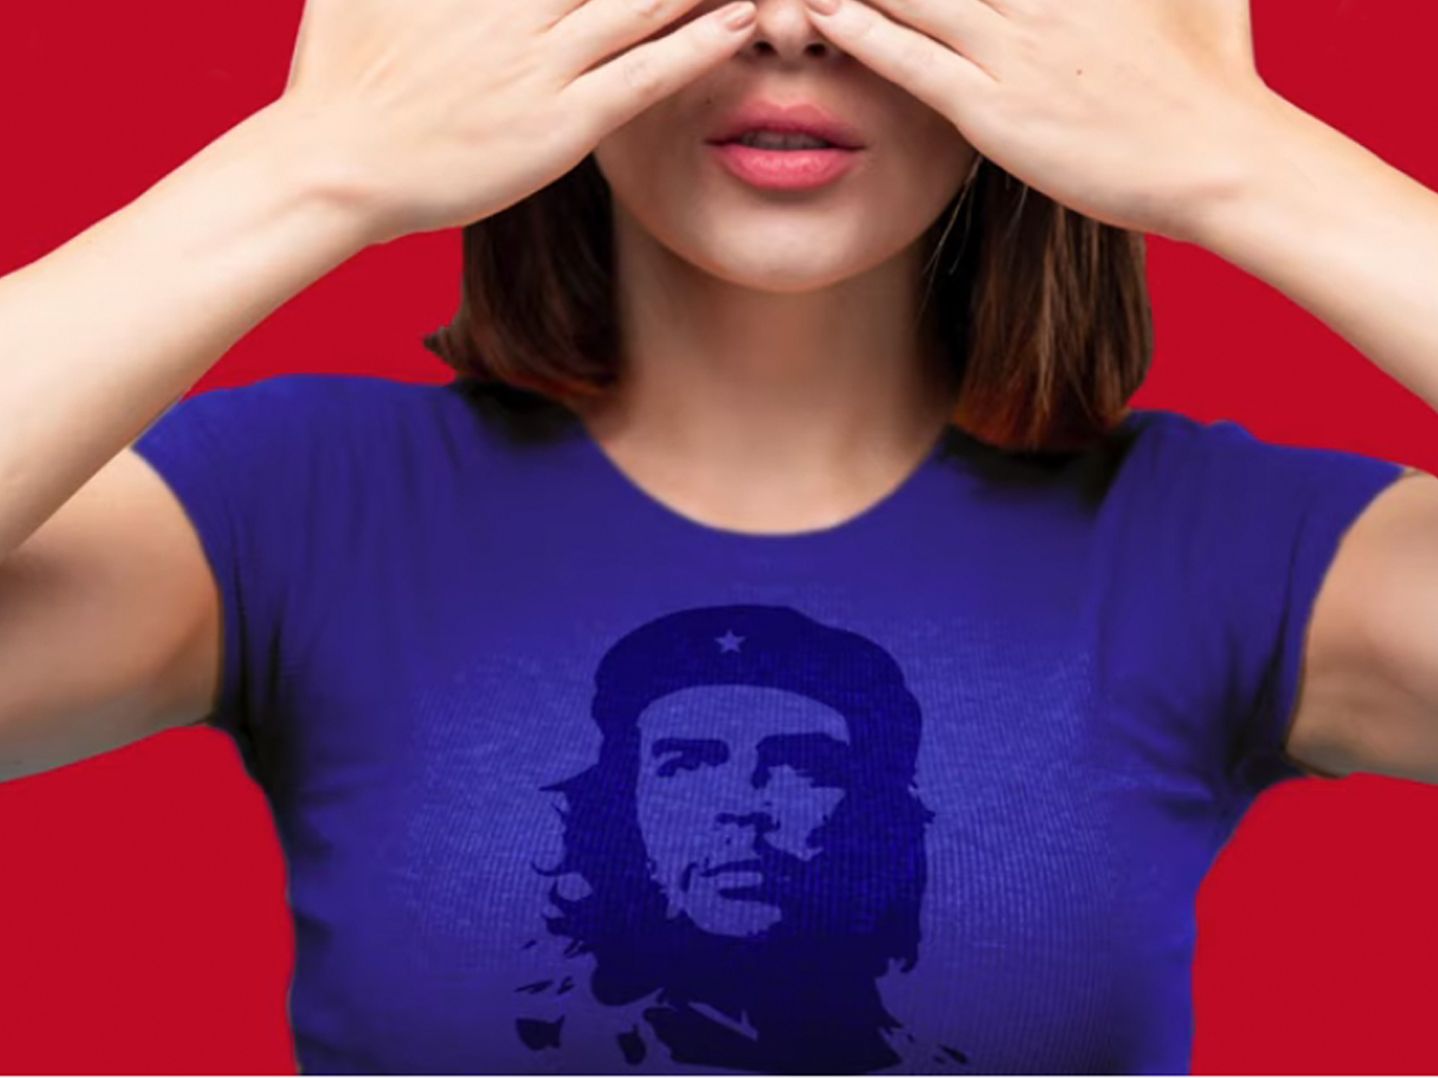 Your Che Guevara shirt celebrates a bloodthirsty maniac